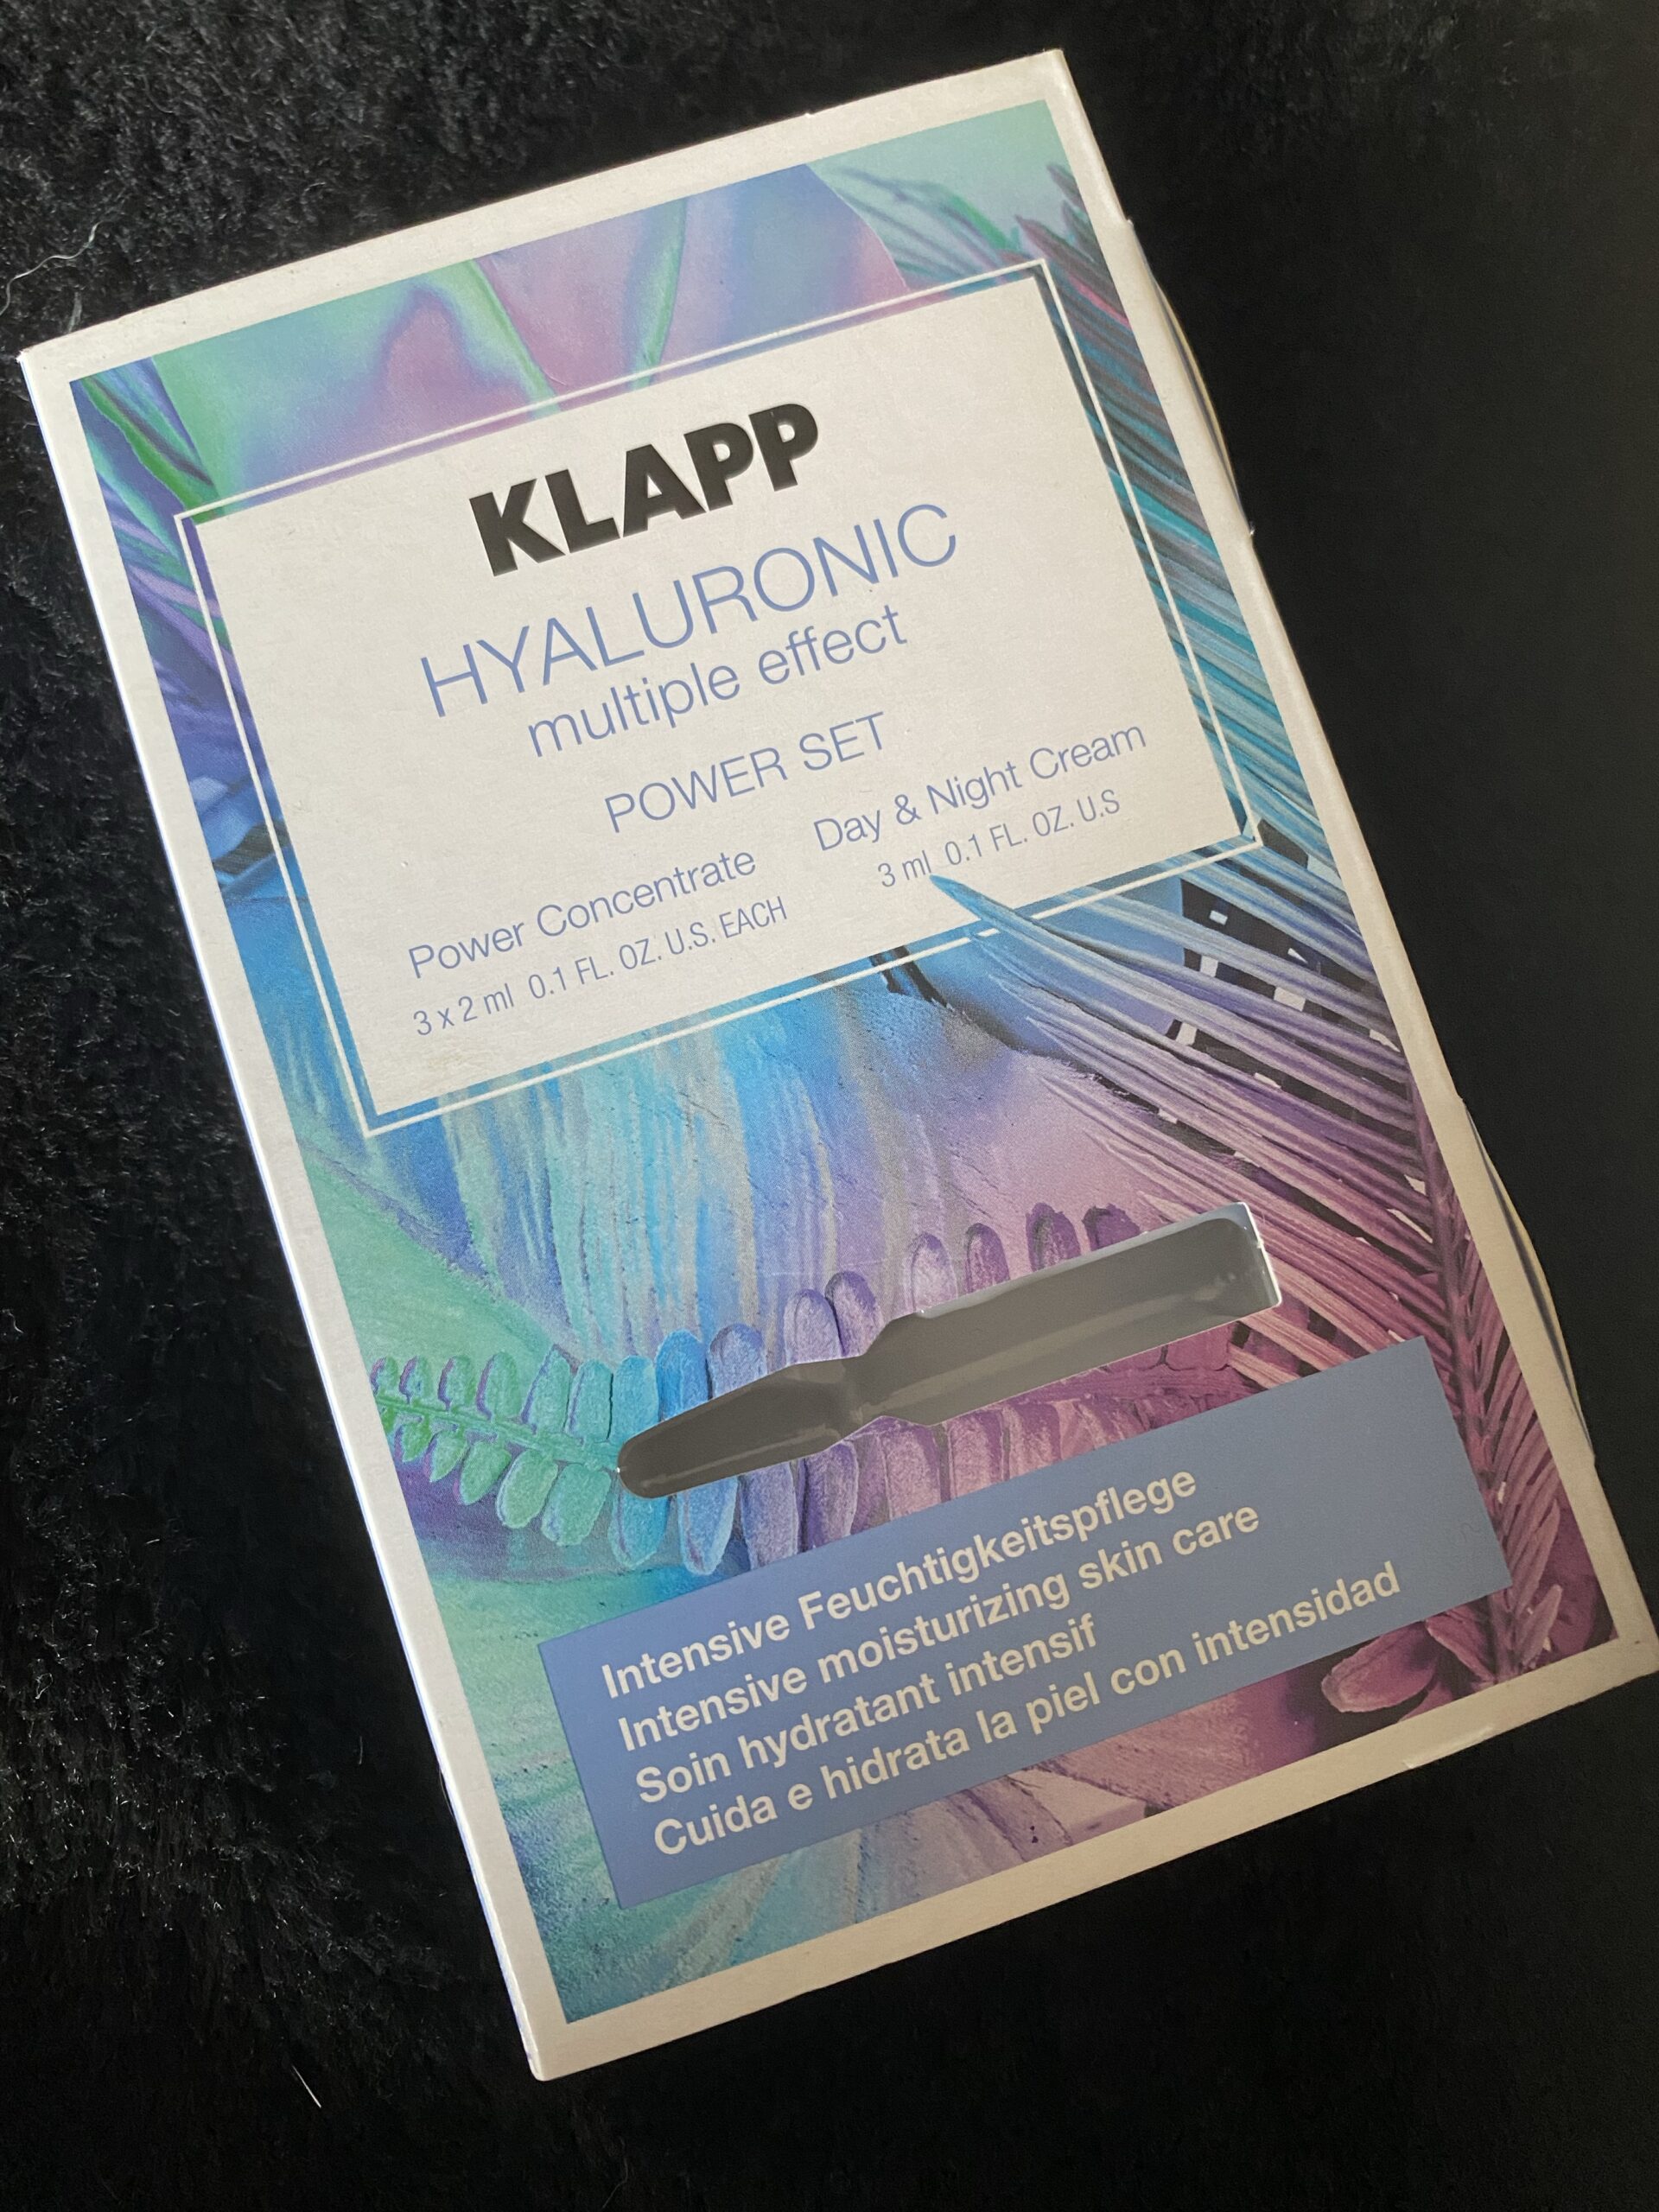 Klapp hyaluronic multiple effect power set